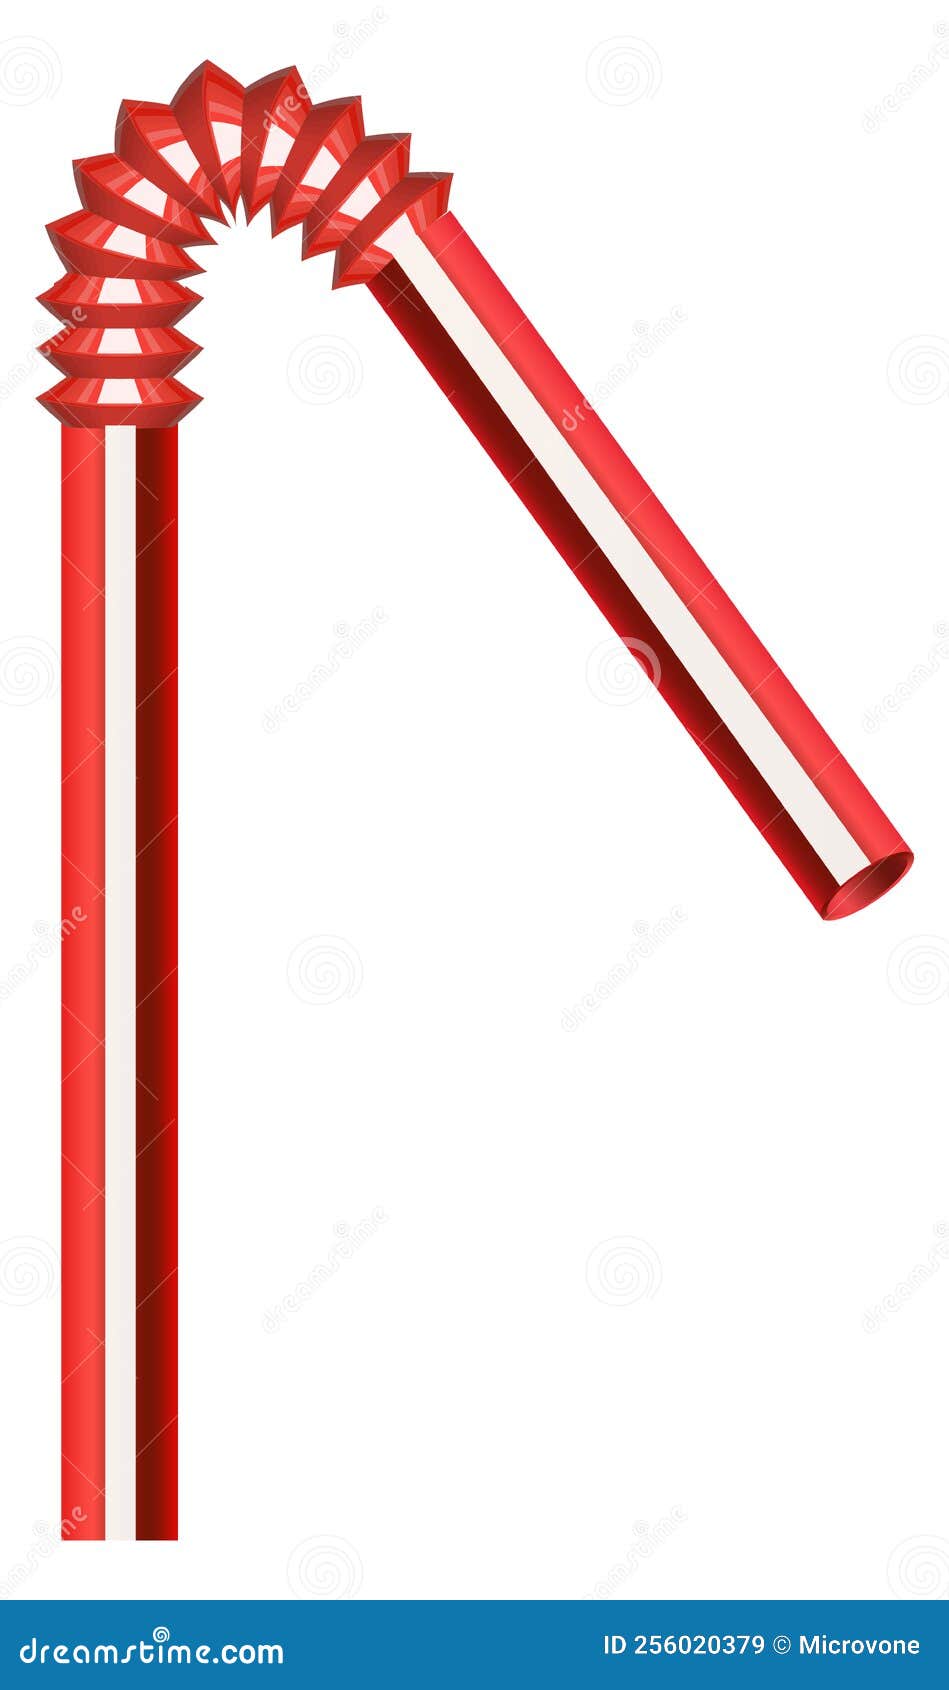 plastic straw. drink bendy red stripe tube